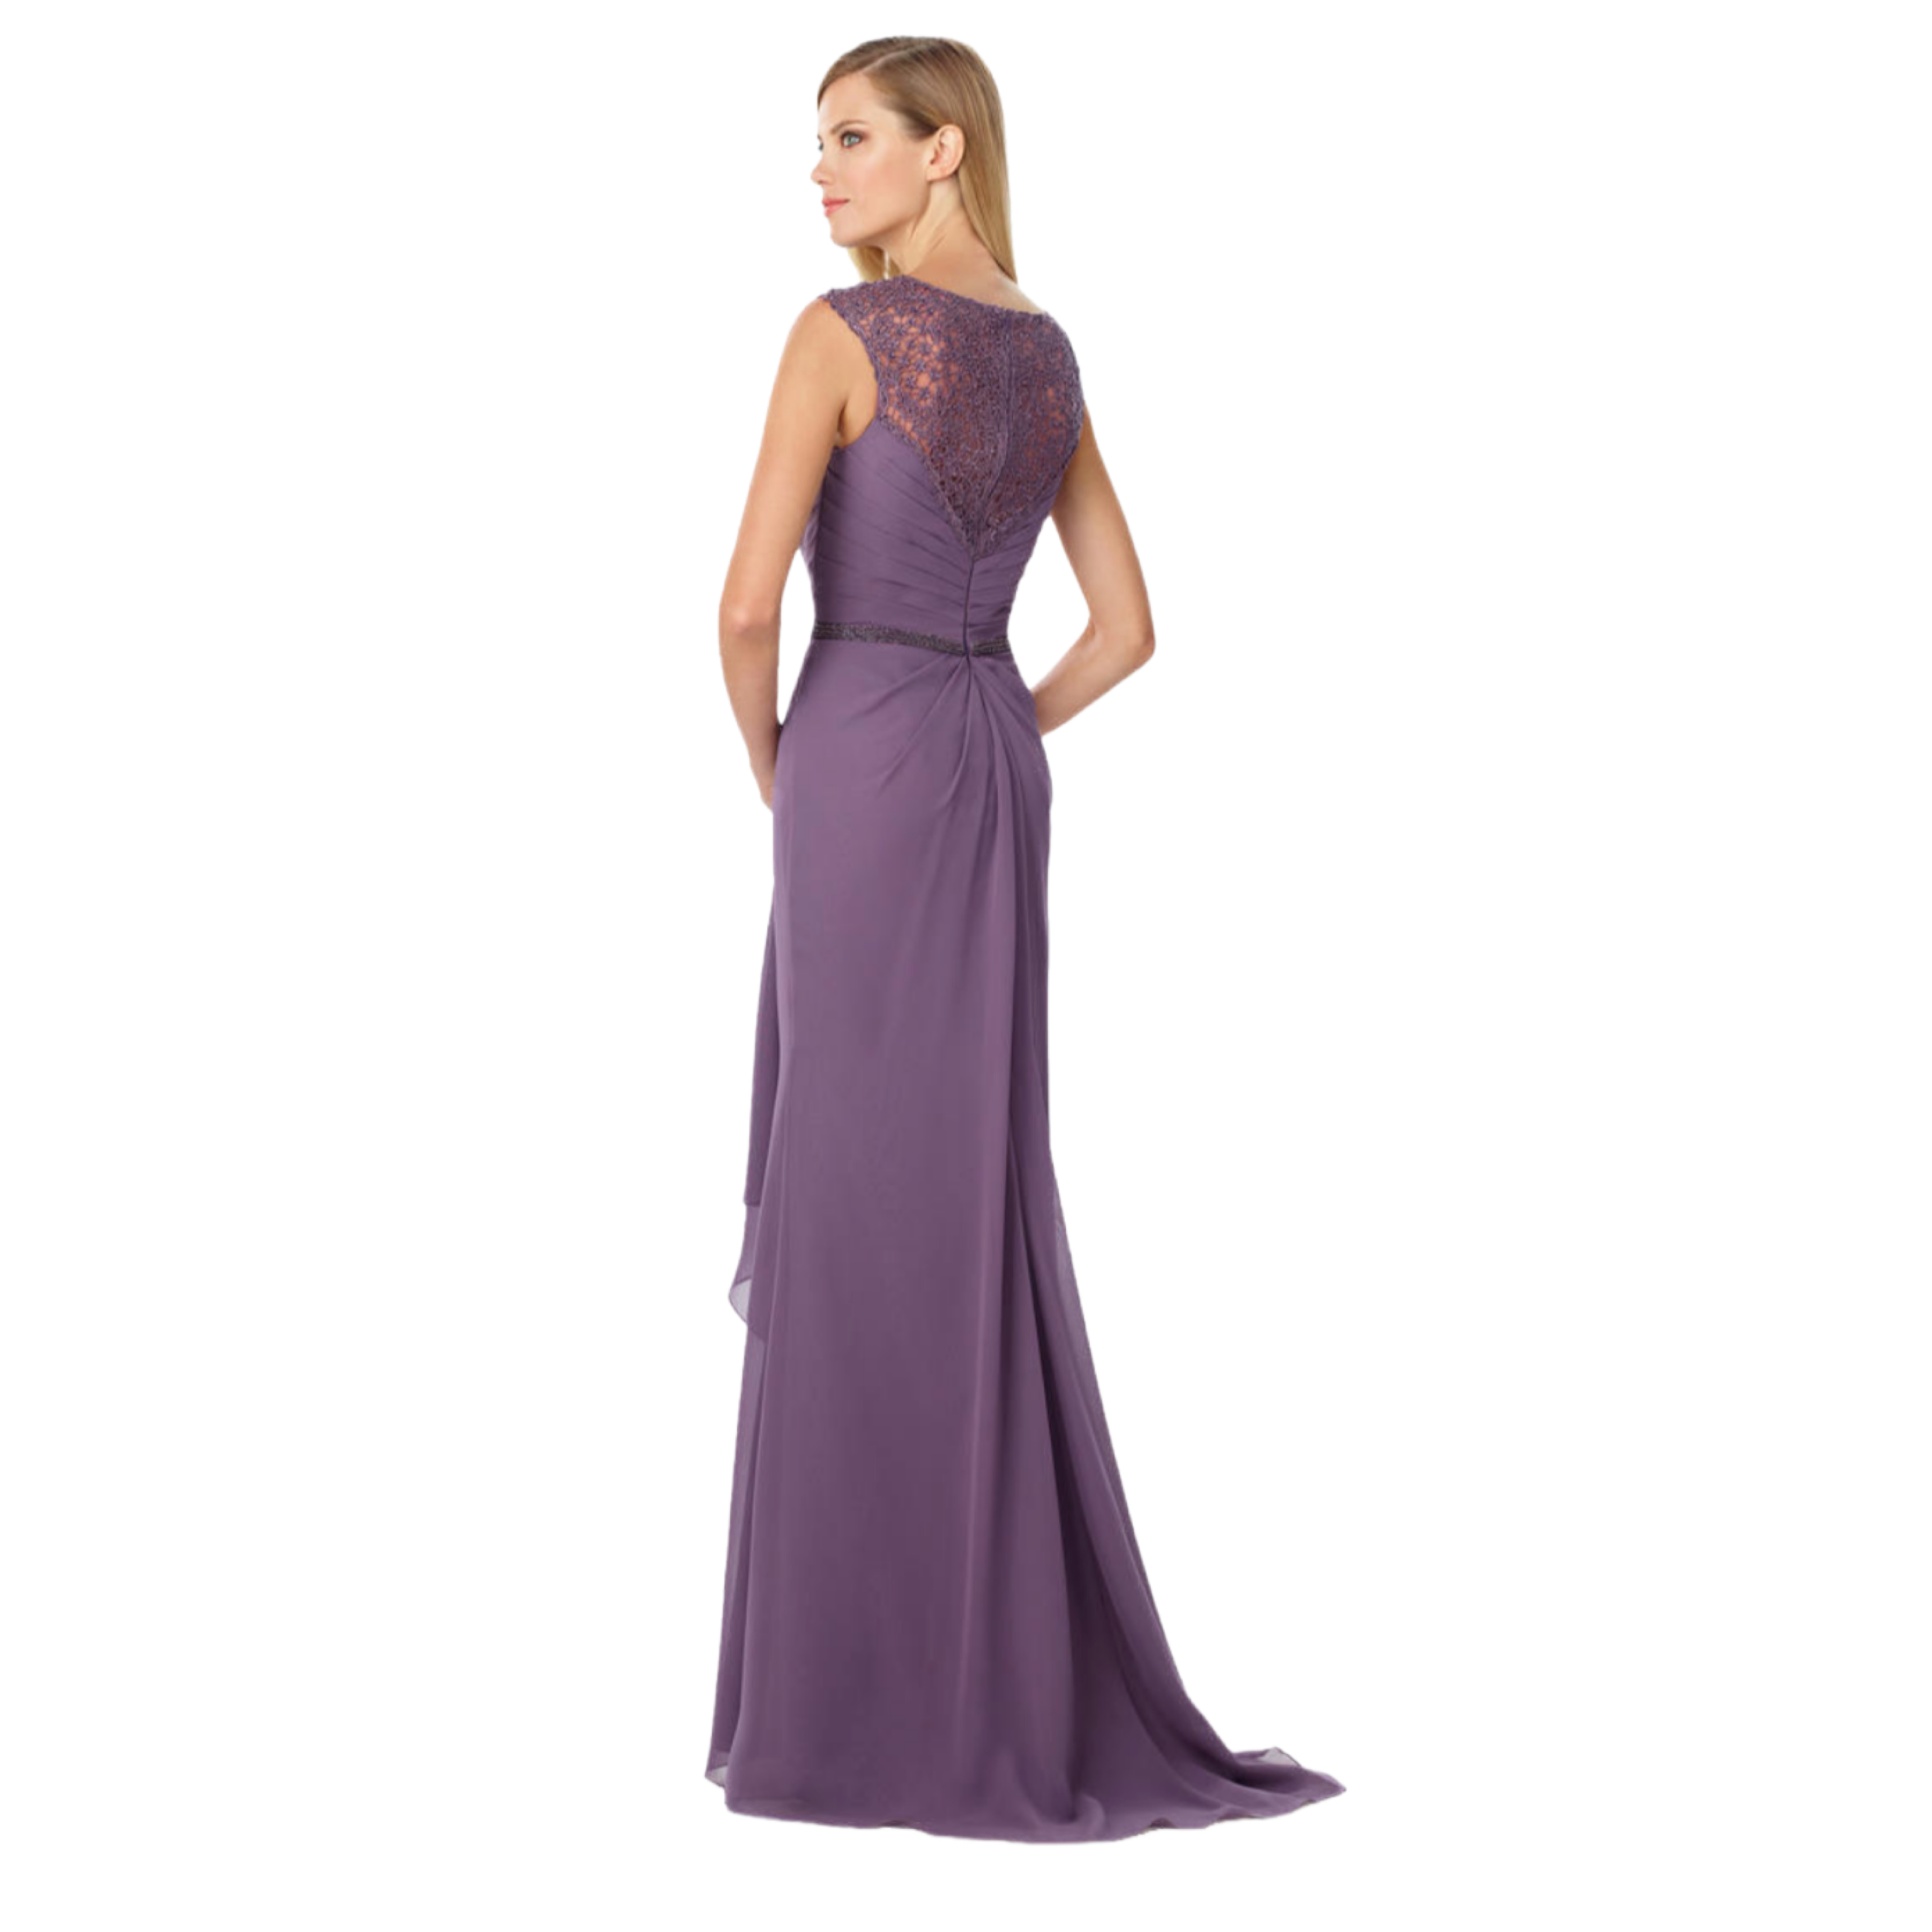 Cameron Blake heather purple dress, size 10, NEW WITH TAGS!